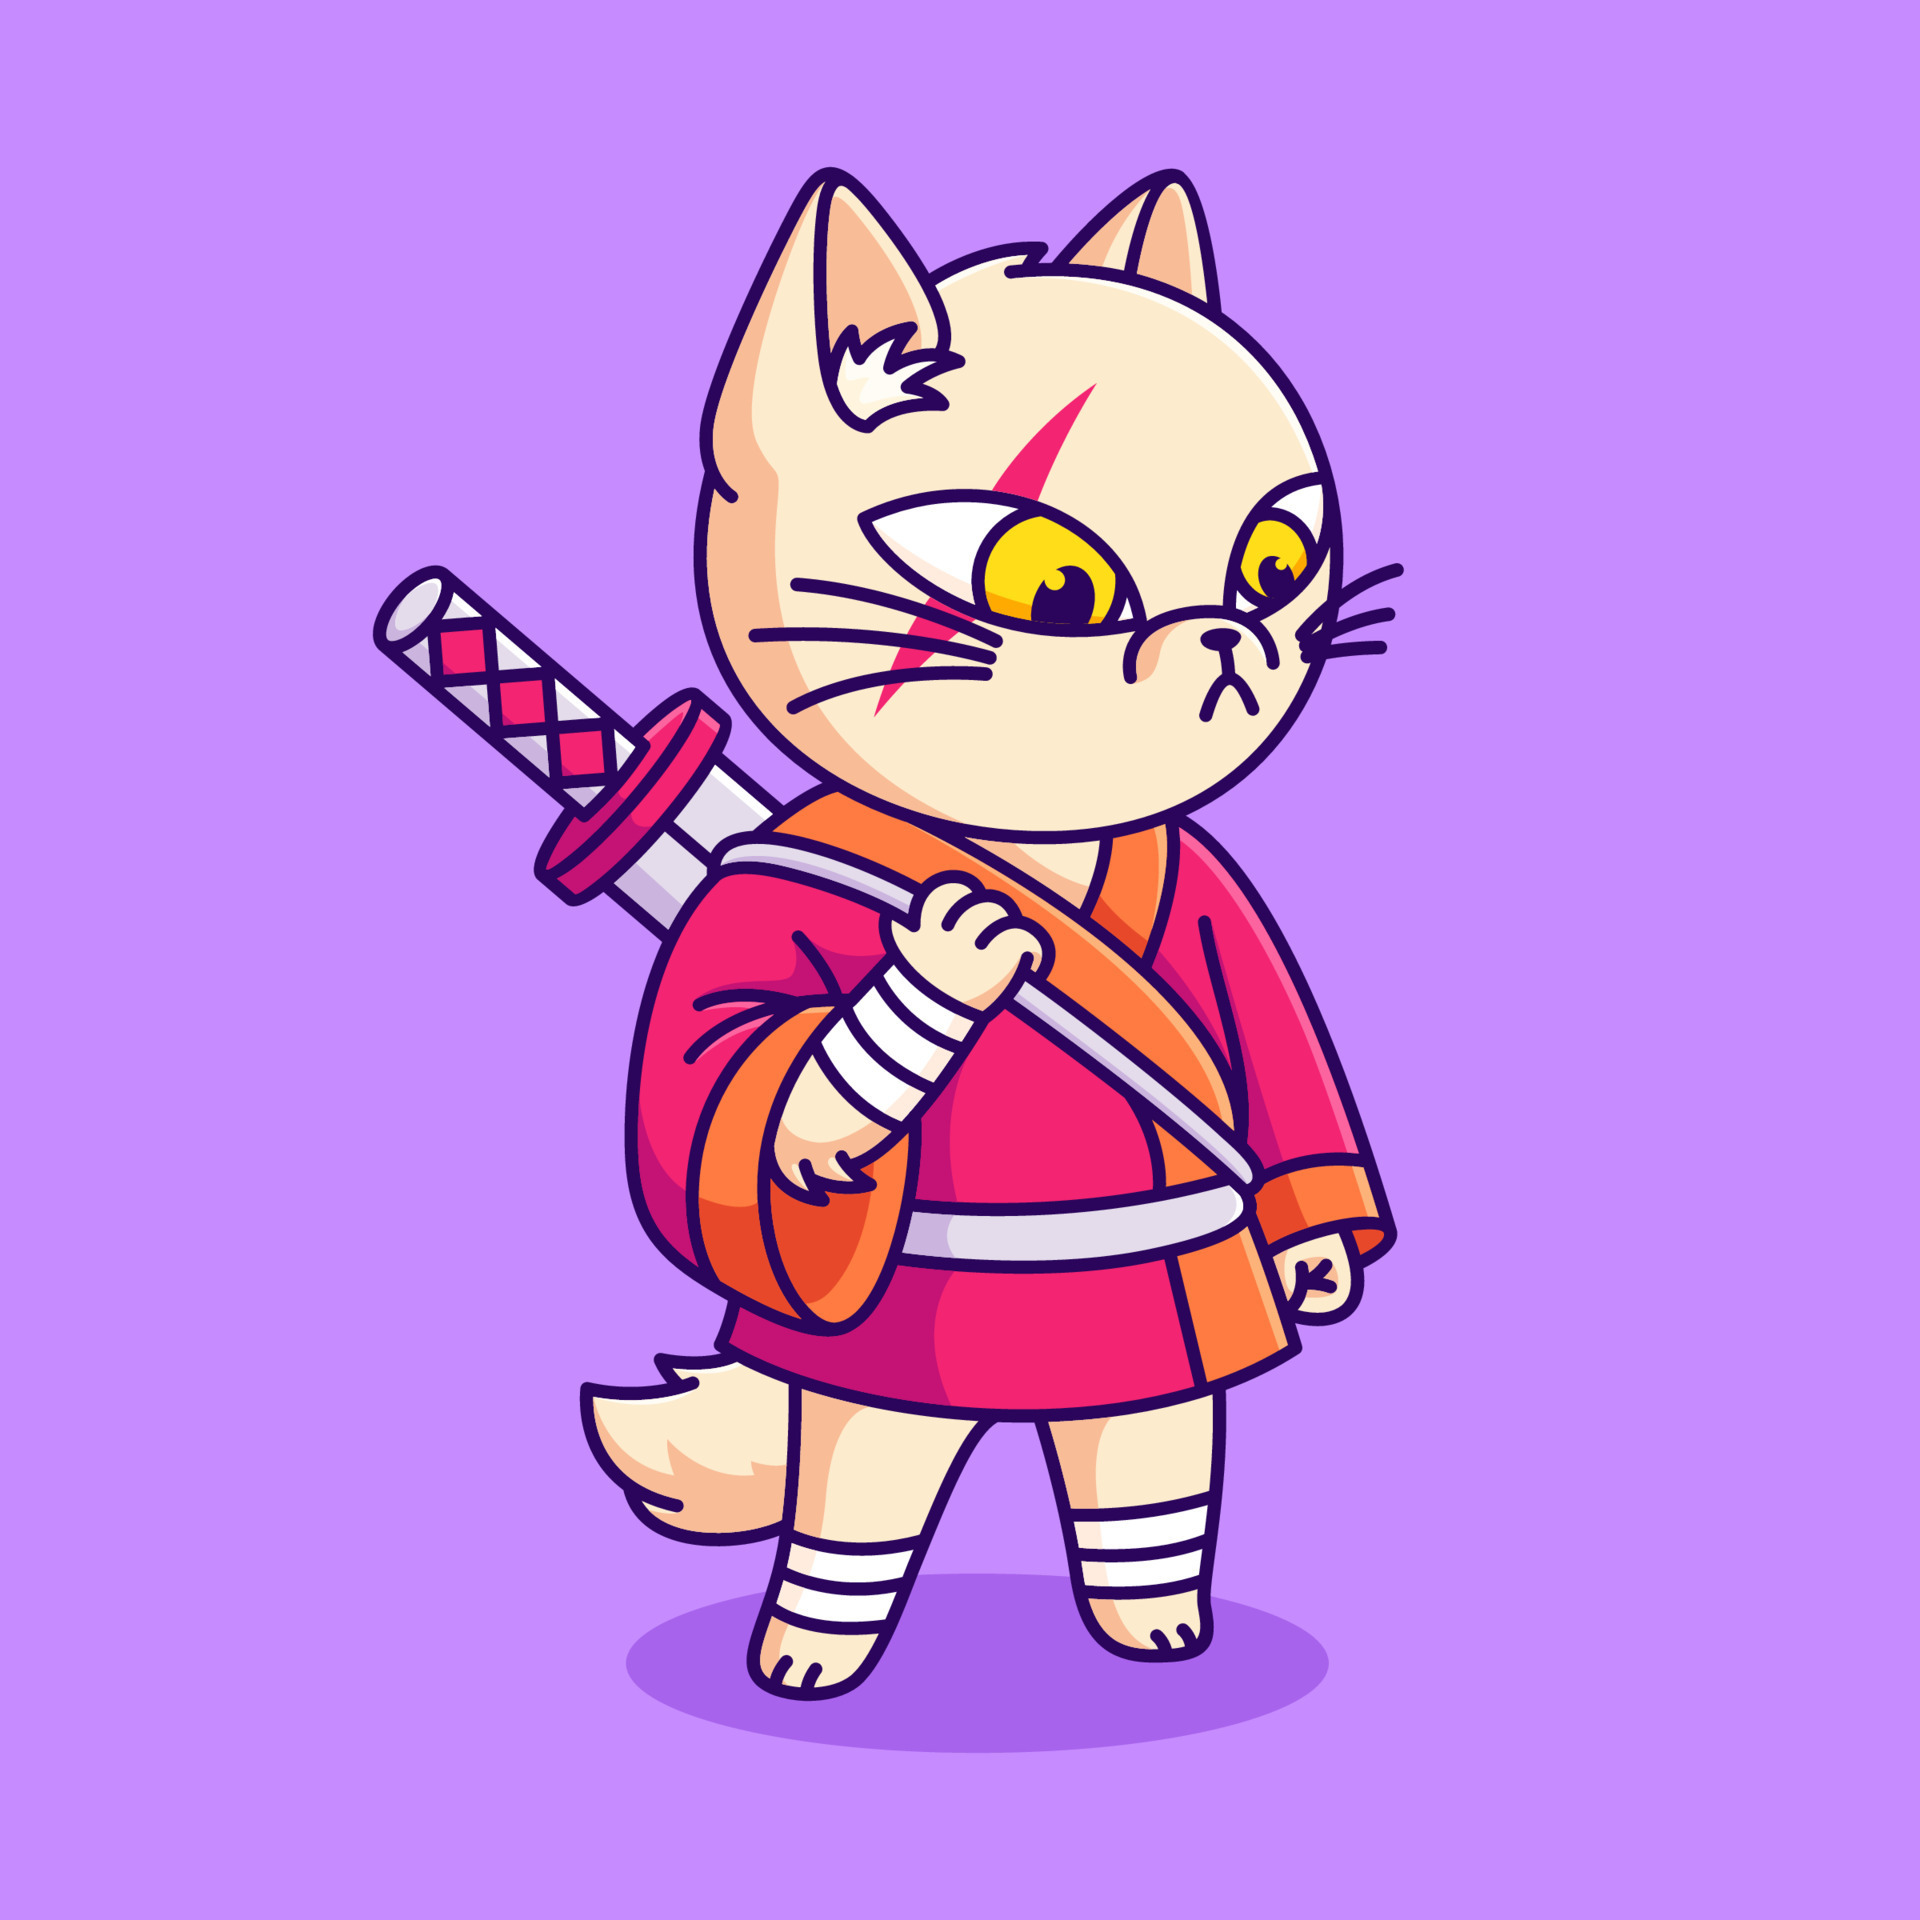 Lindo gato ninja segurando uma espada